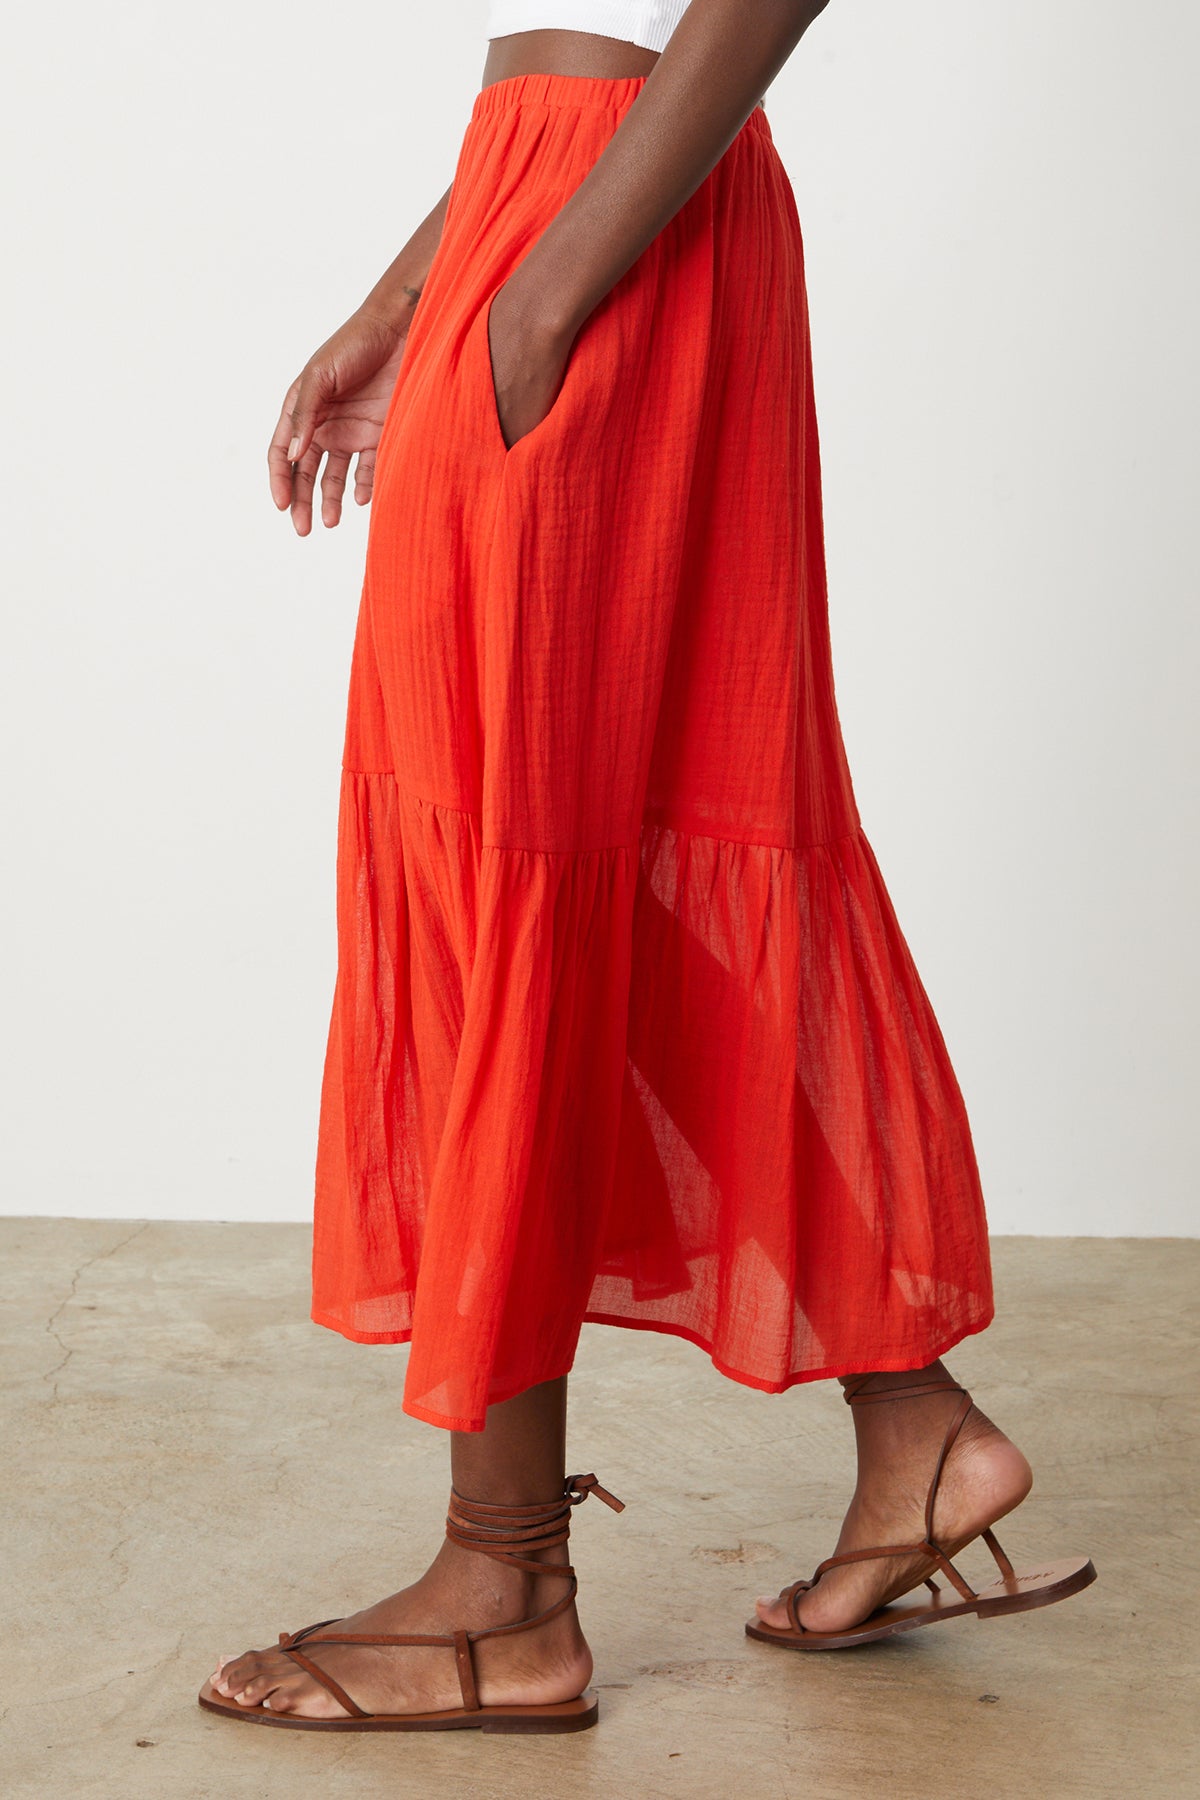 Mckenna Tiered Skirt in bright cardinal red side-26255713501377